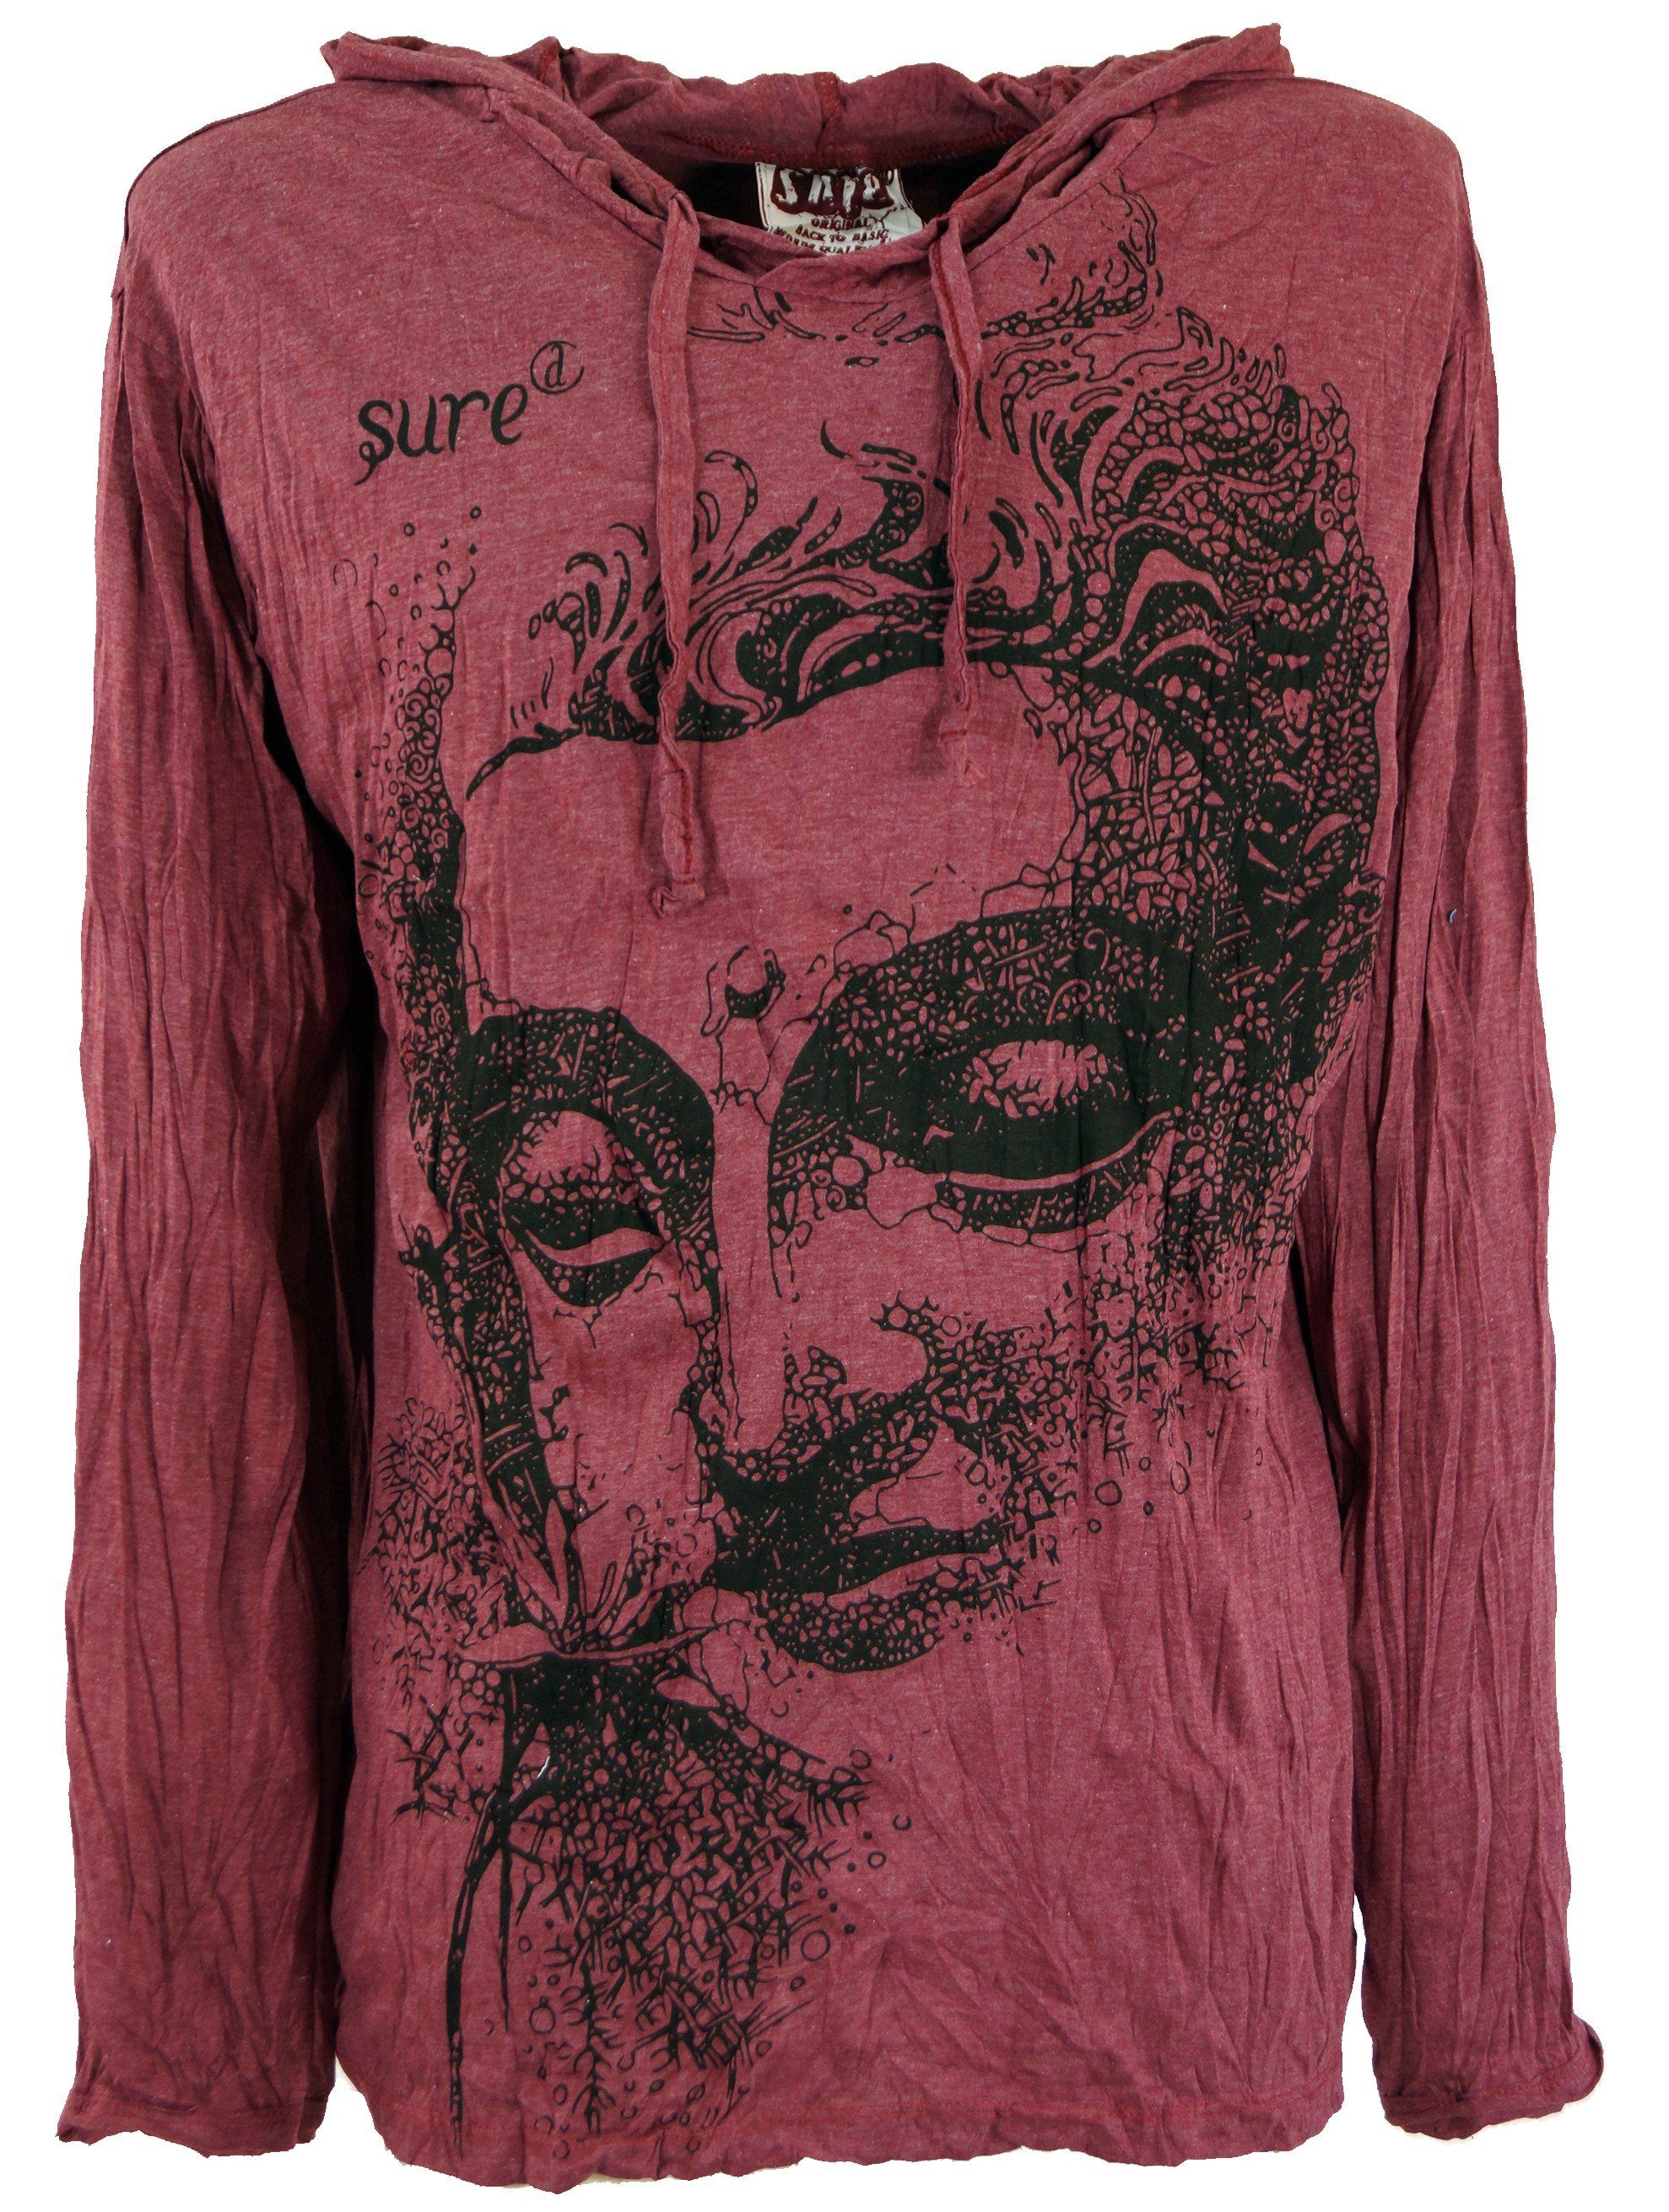 T-Shirt alternative Buddha.. Kapuzenshirt Bekleidung Dreaming bordeaux Sure Guru-Shop Festival, Style, Goa Langarmshirt,